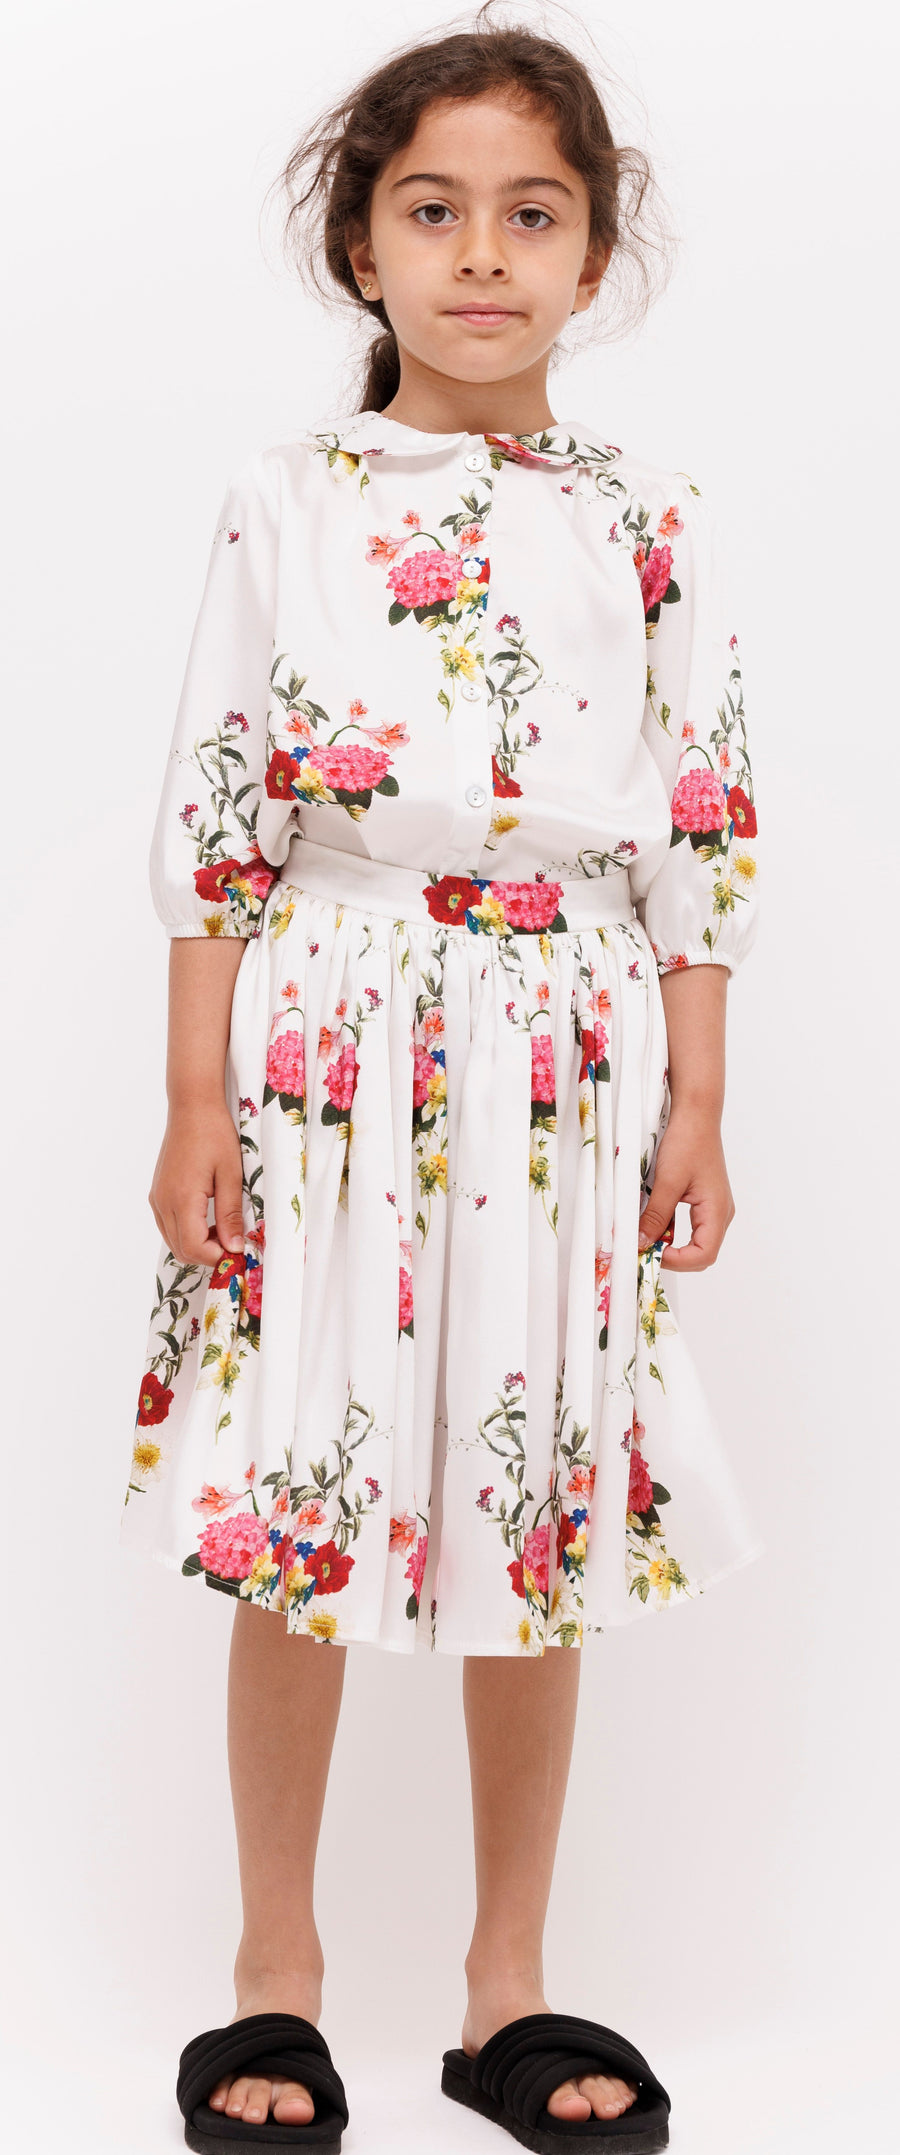 Blossoms White Full Skirt by Christina Rohde